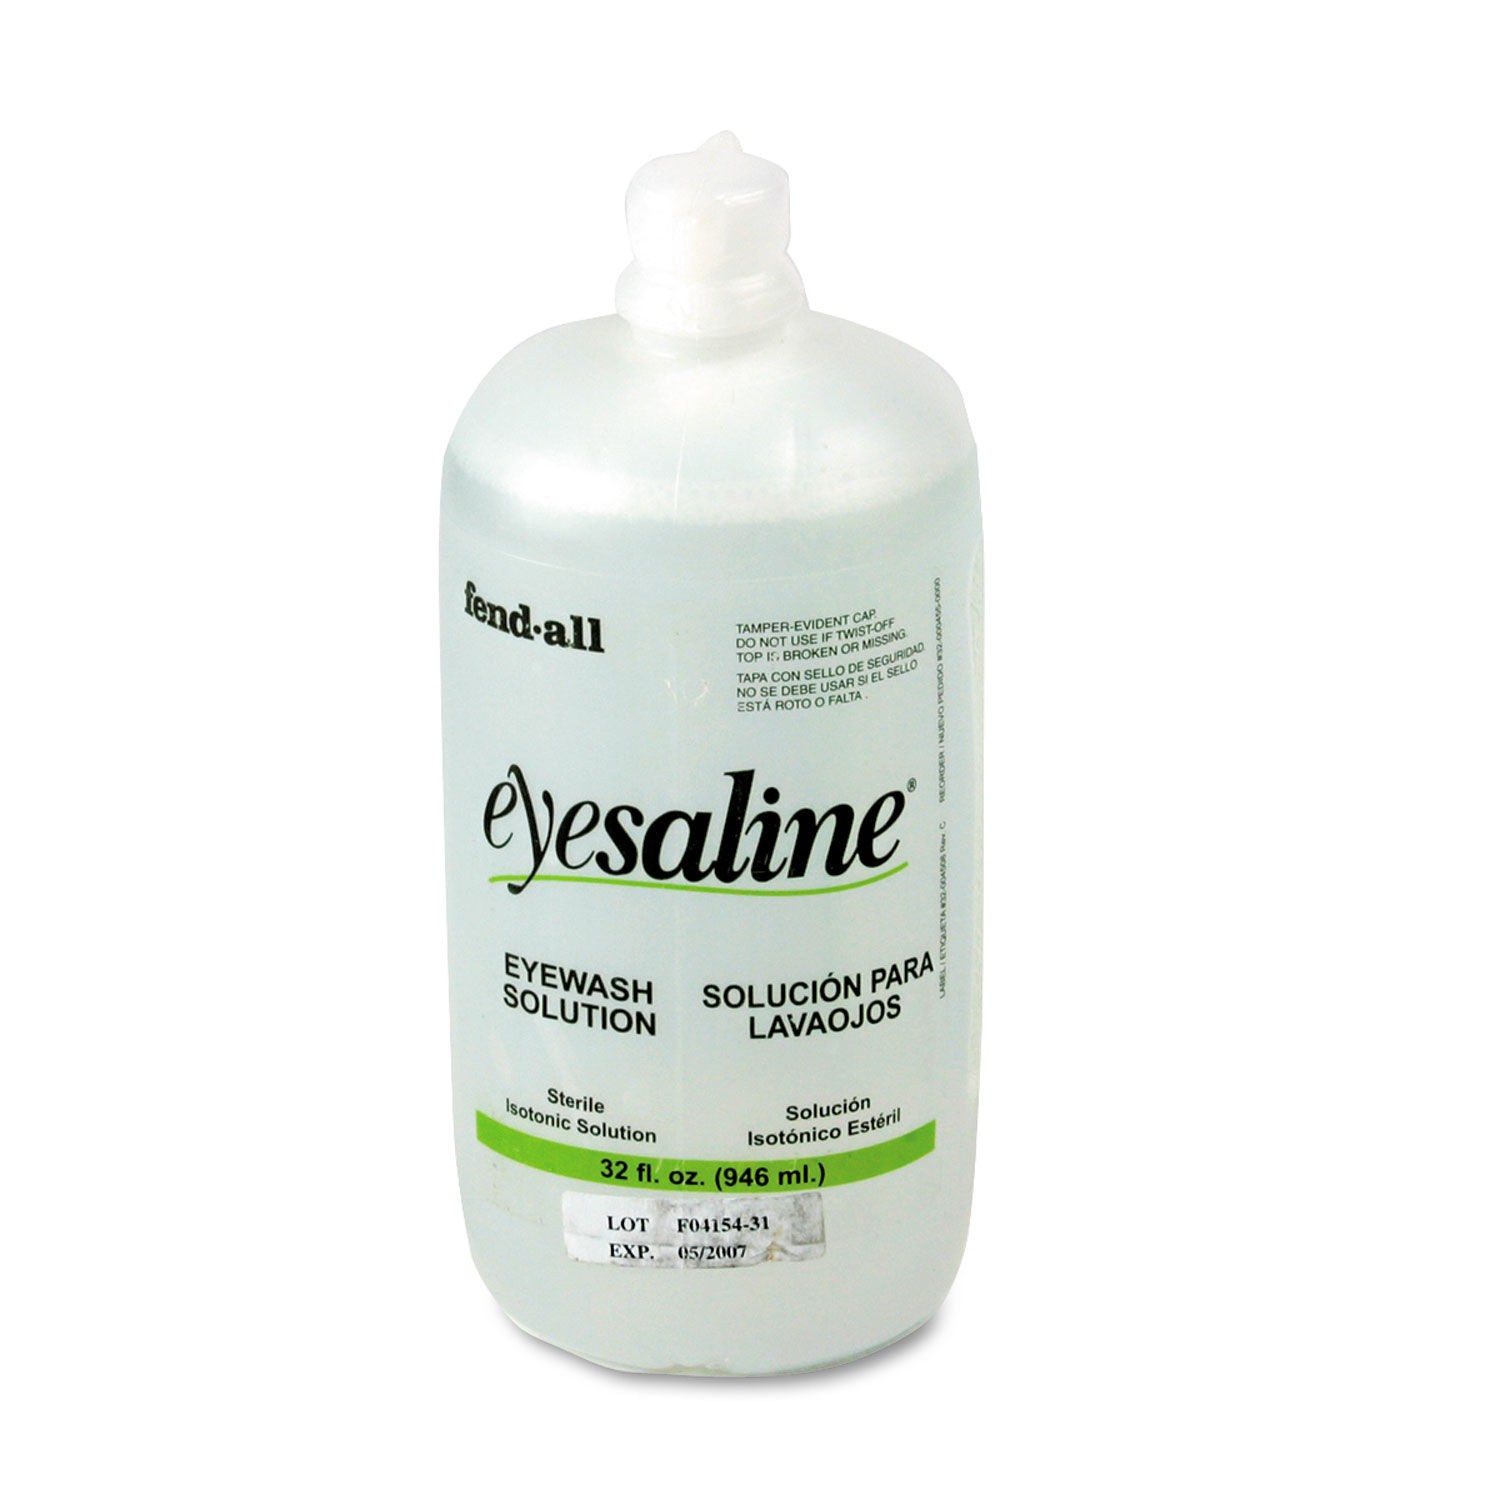 Fendall Eyesaline Eyewash Saline Solution Bottle Refill, 32 oz